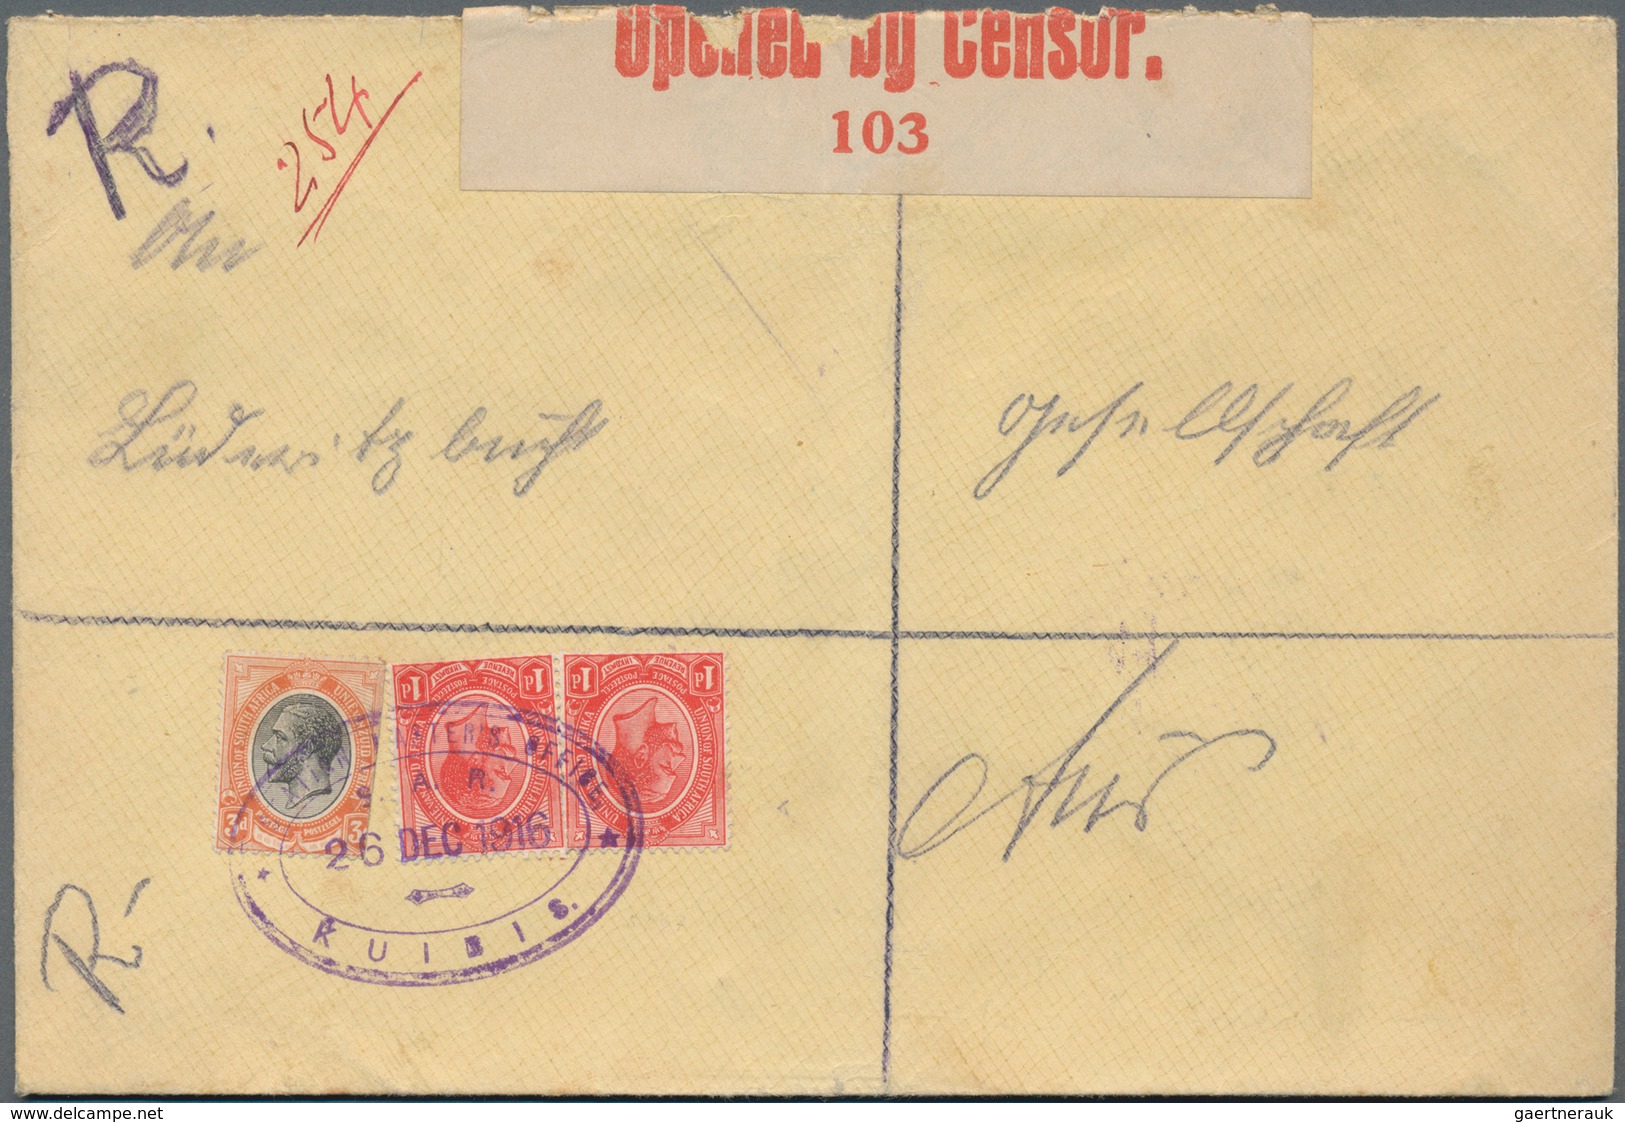 Südwestafrika - Stempel: 1916, "STATION MASTER'S OFFICE KUIBIS 26 DEC 1916", Violet Oval Dater, Clea - German South West Africa